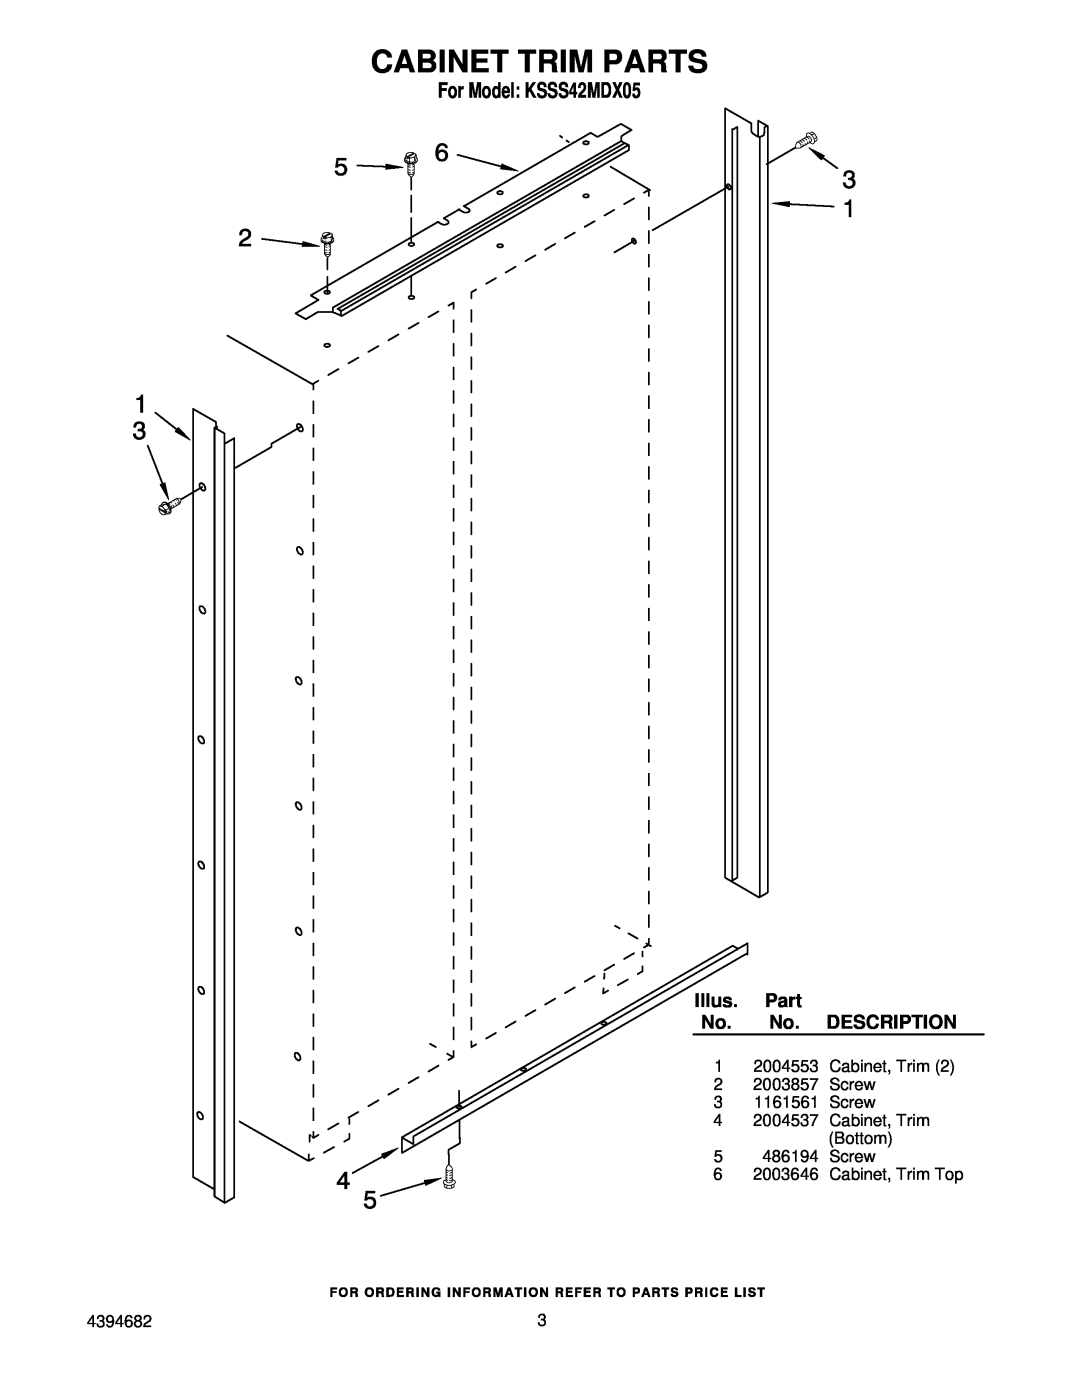 KitchenAid manual Cabinet Trim Parts, Description, For Model KSSS42MDX05, Illus 